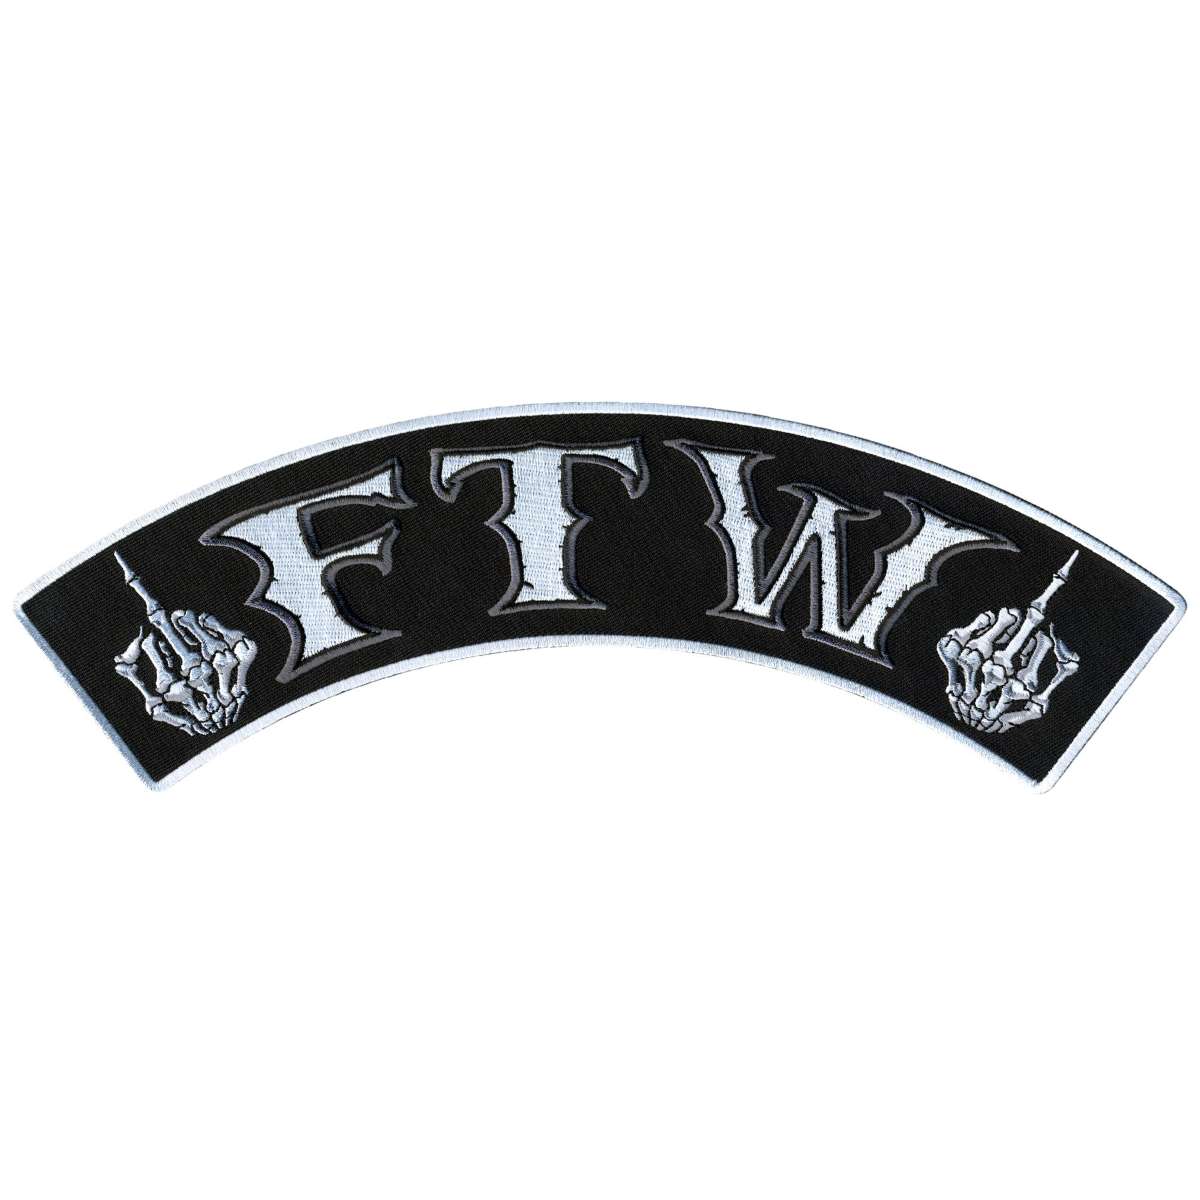 Hot Leathers FTW 12" X 3" Top Rocker Patch PPM4191